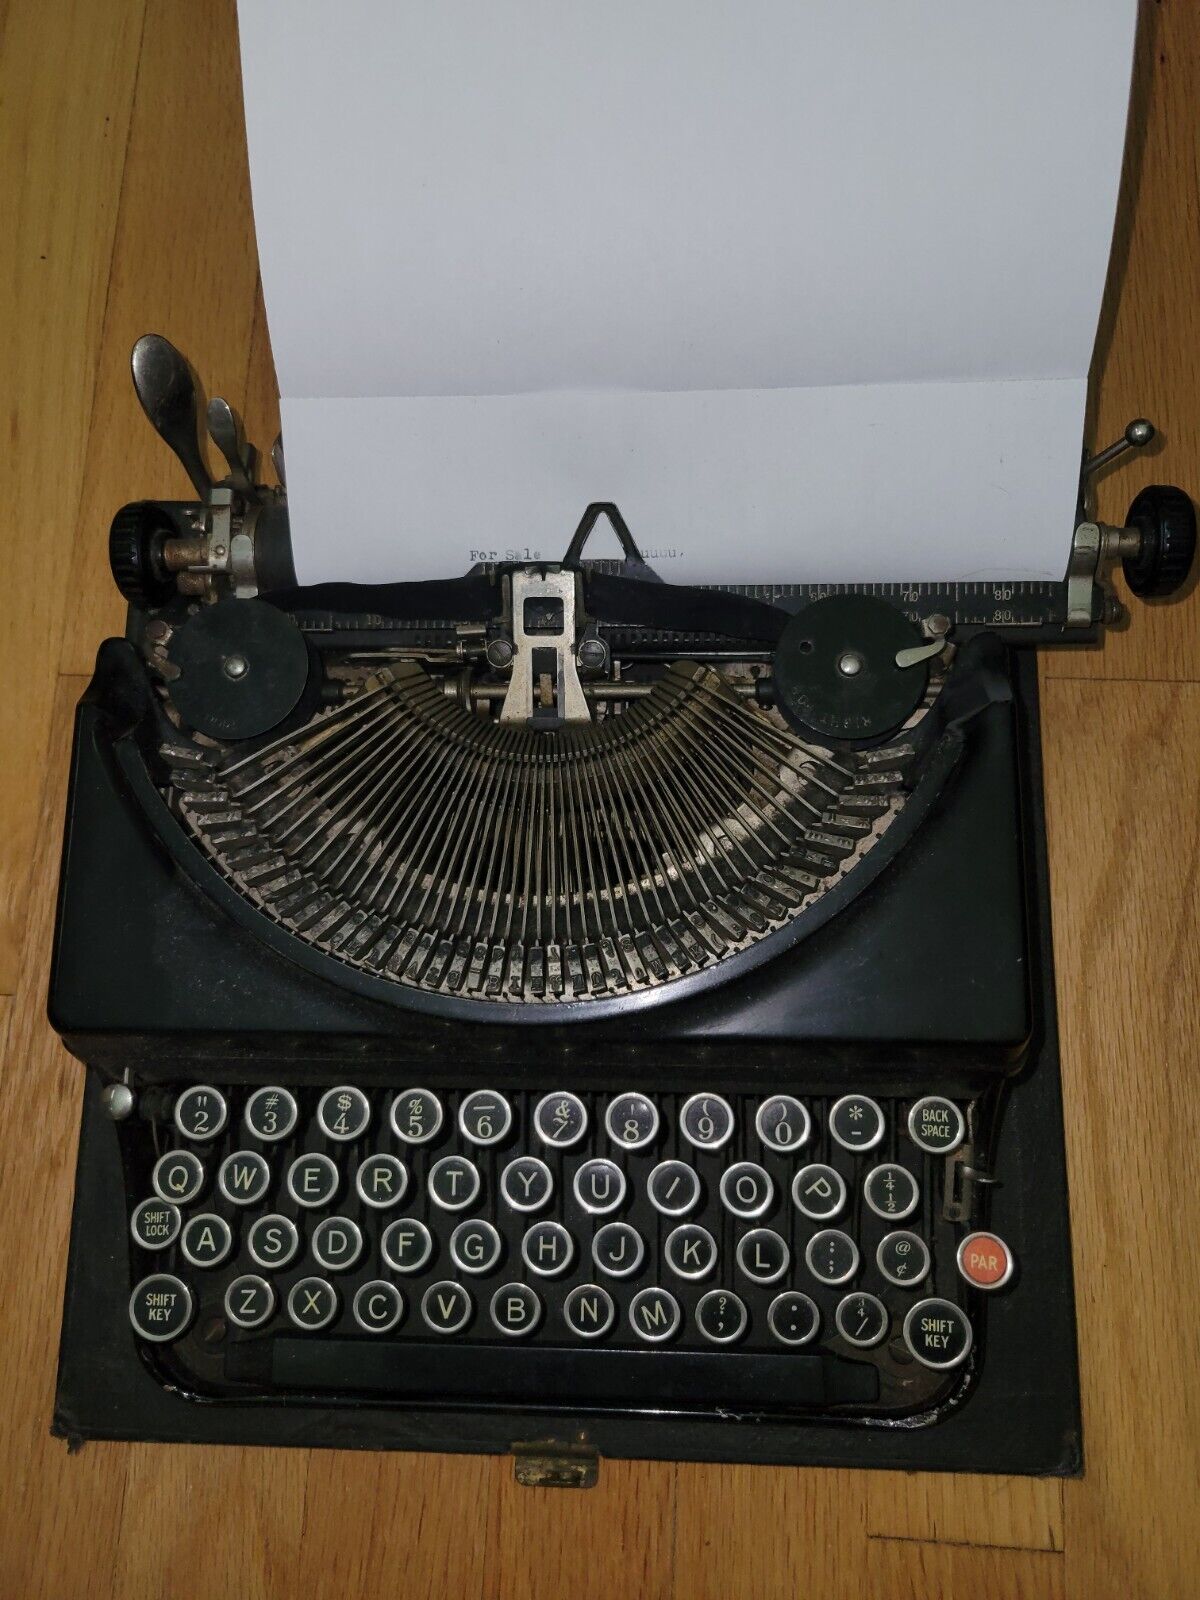 Remington No. 5 Portable Typewriter With Case